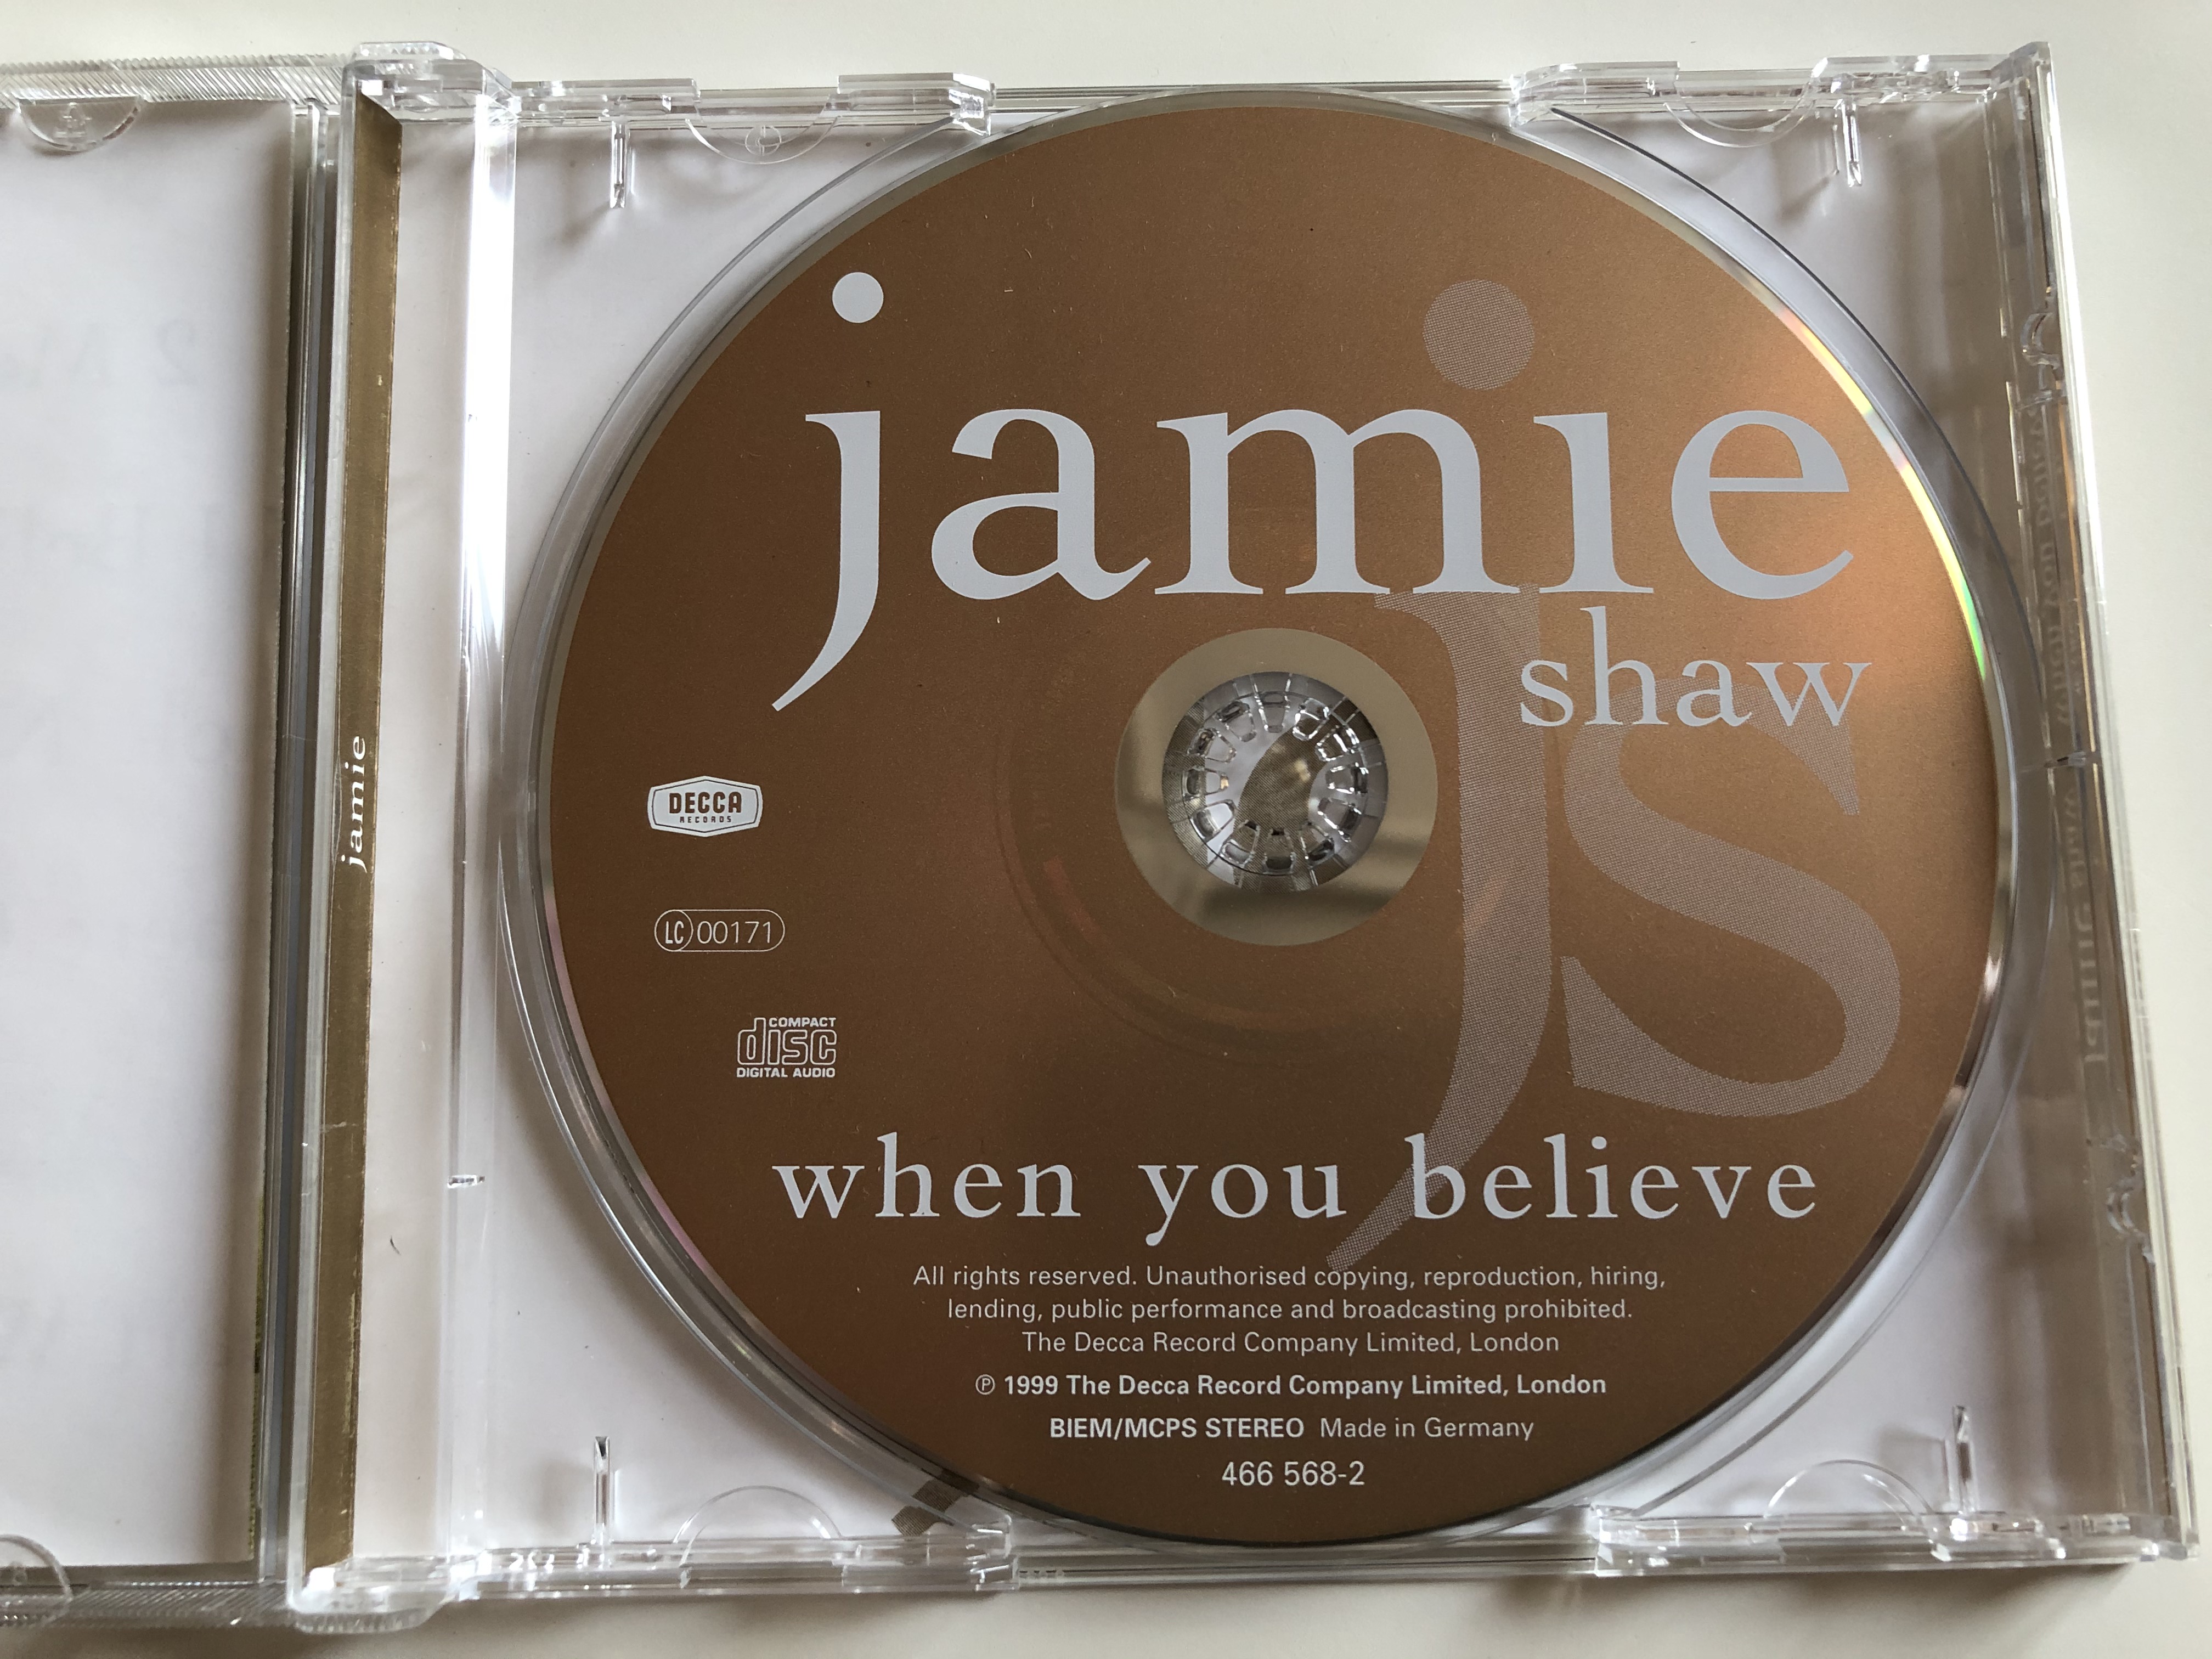 jamie-shaw-when-you-believe-decca-audio-cd-1999-stereo-466-568-2-5-.jpg